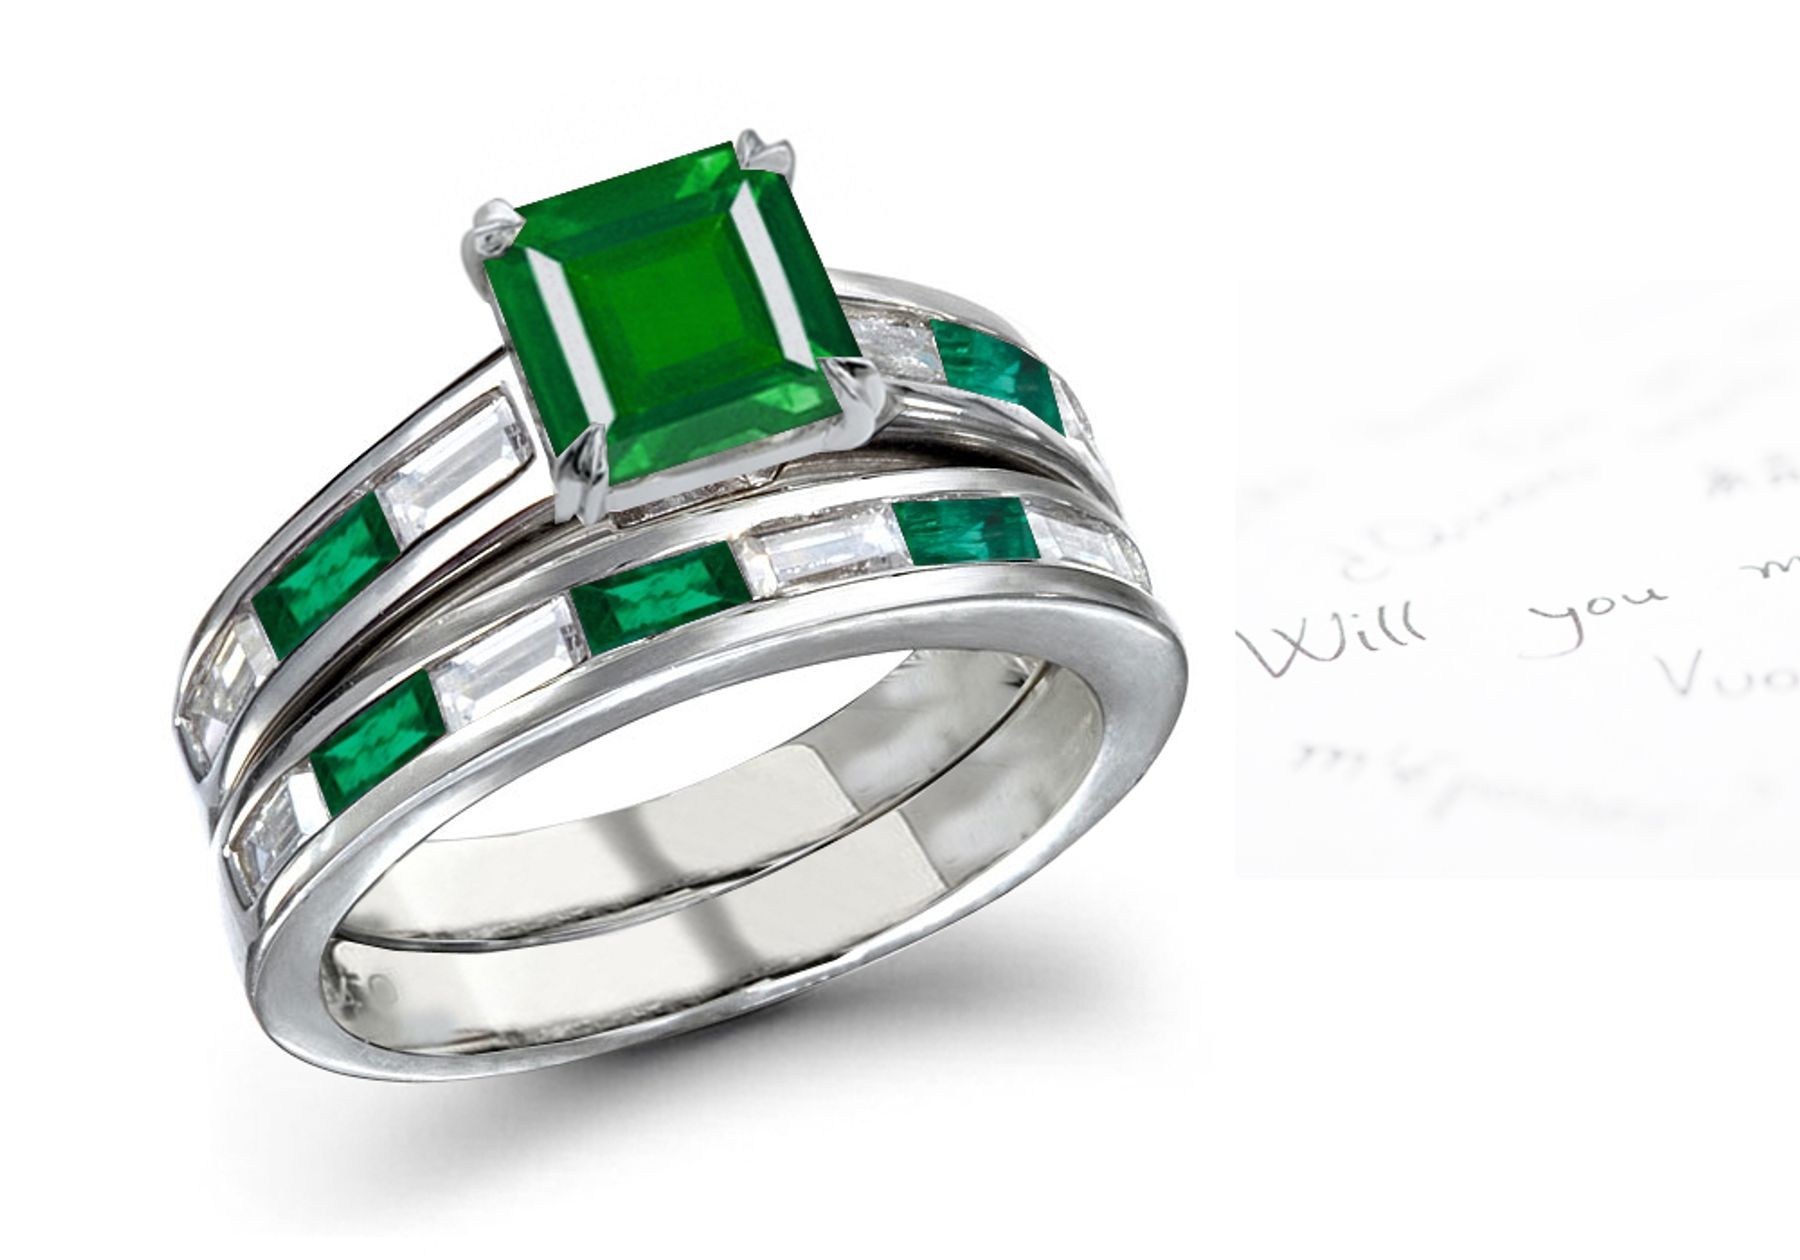 Flawless Solitaire Princess Cut Sea Green Emerald Cut Baguette Diamond Ring & Platinum Band